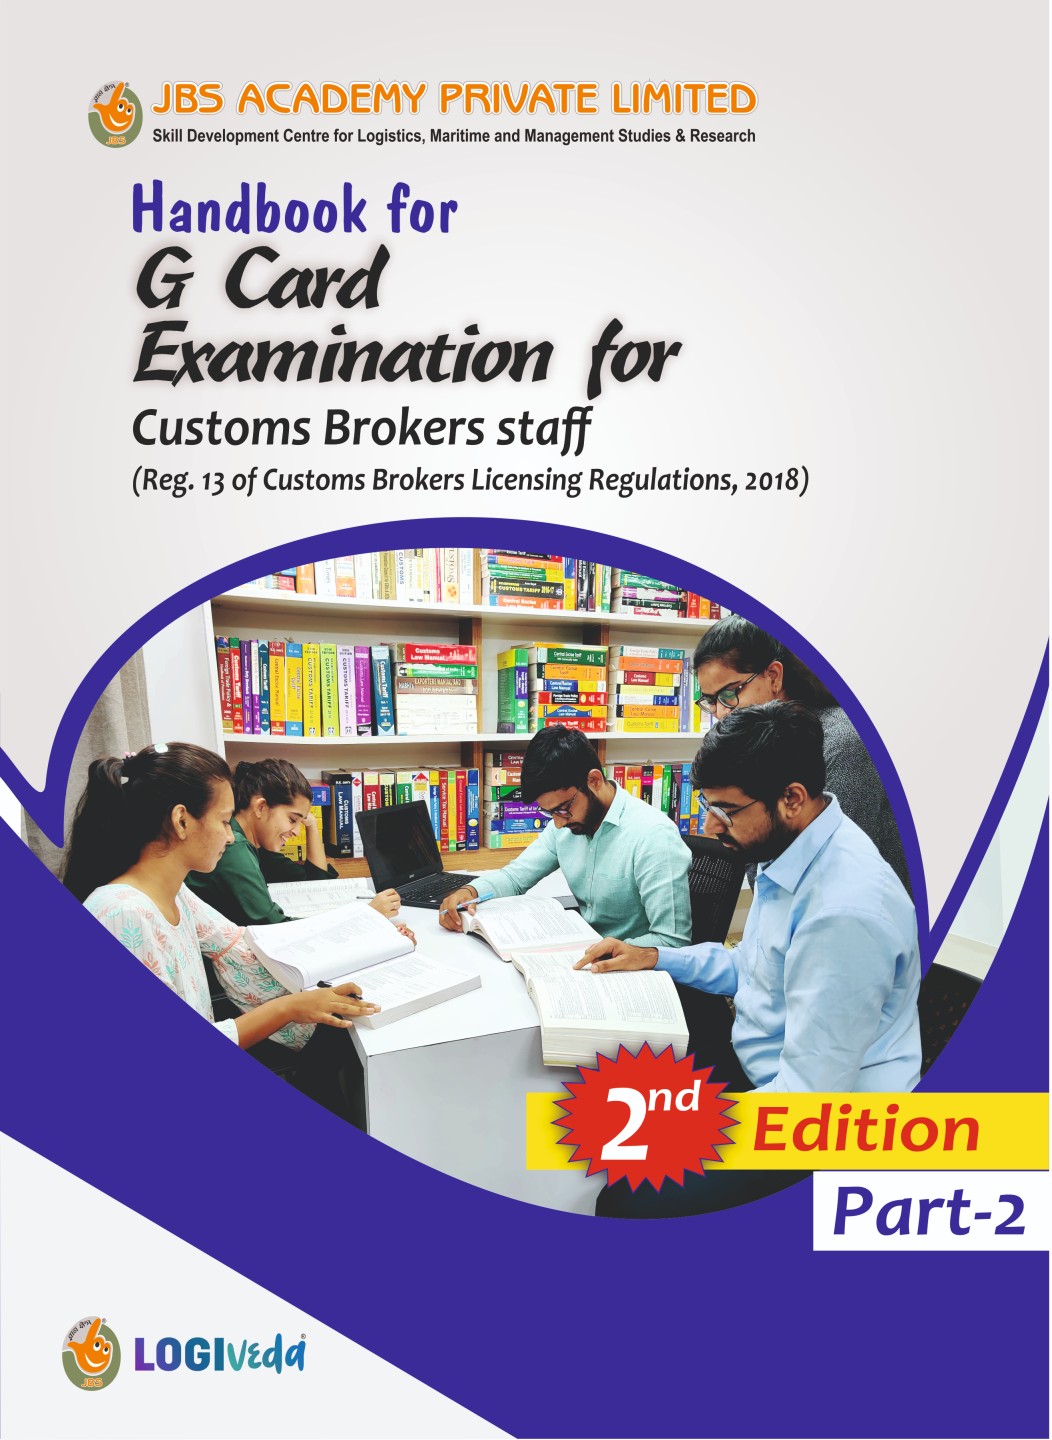 Part 2 of Handbook for G Card Examination